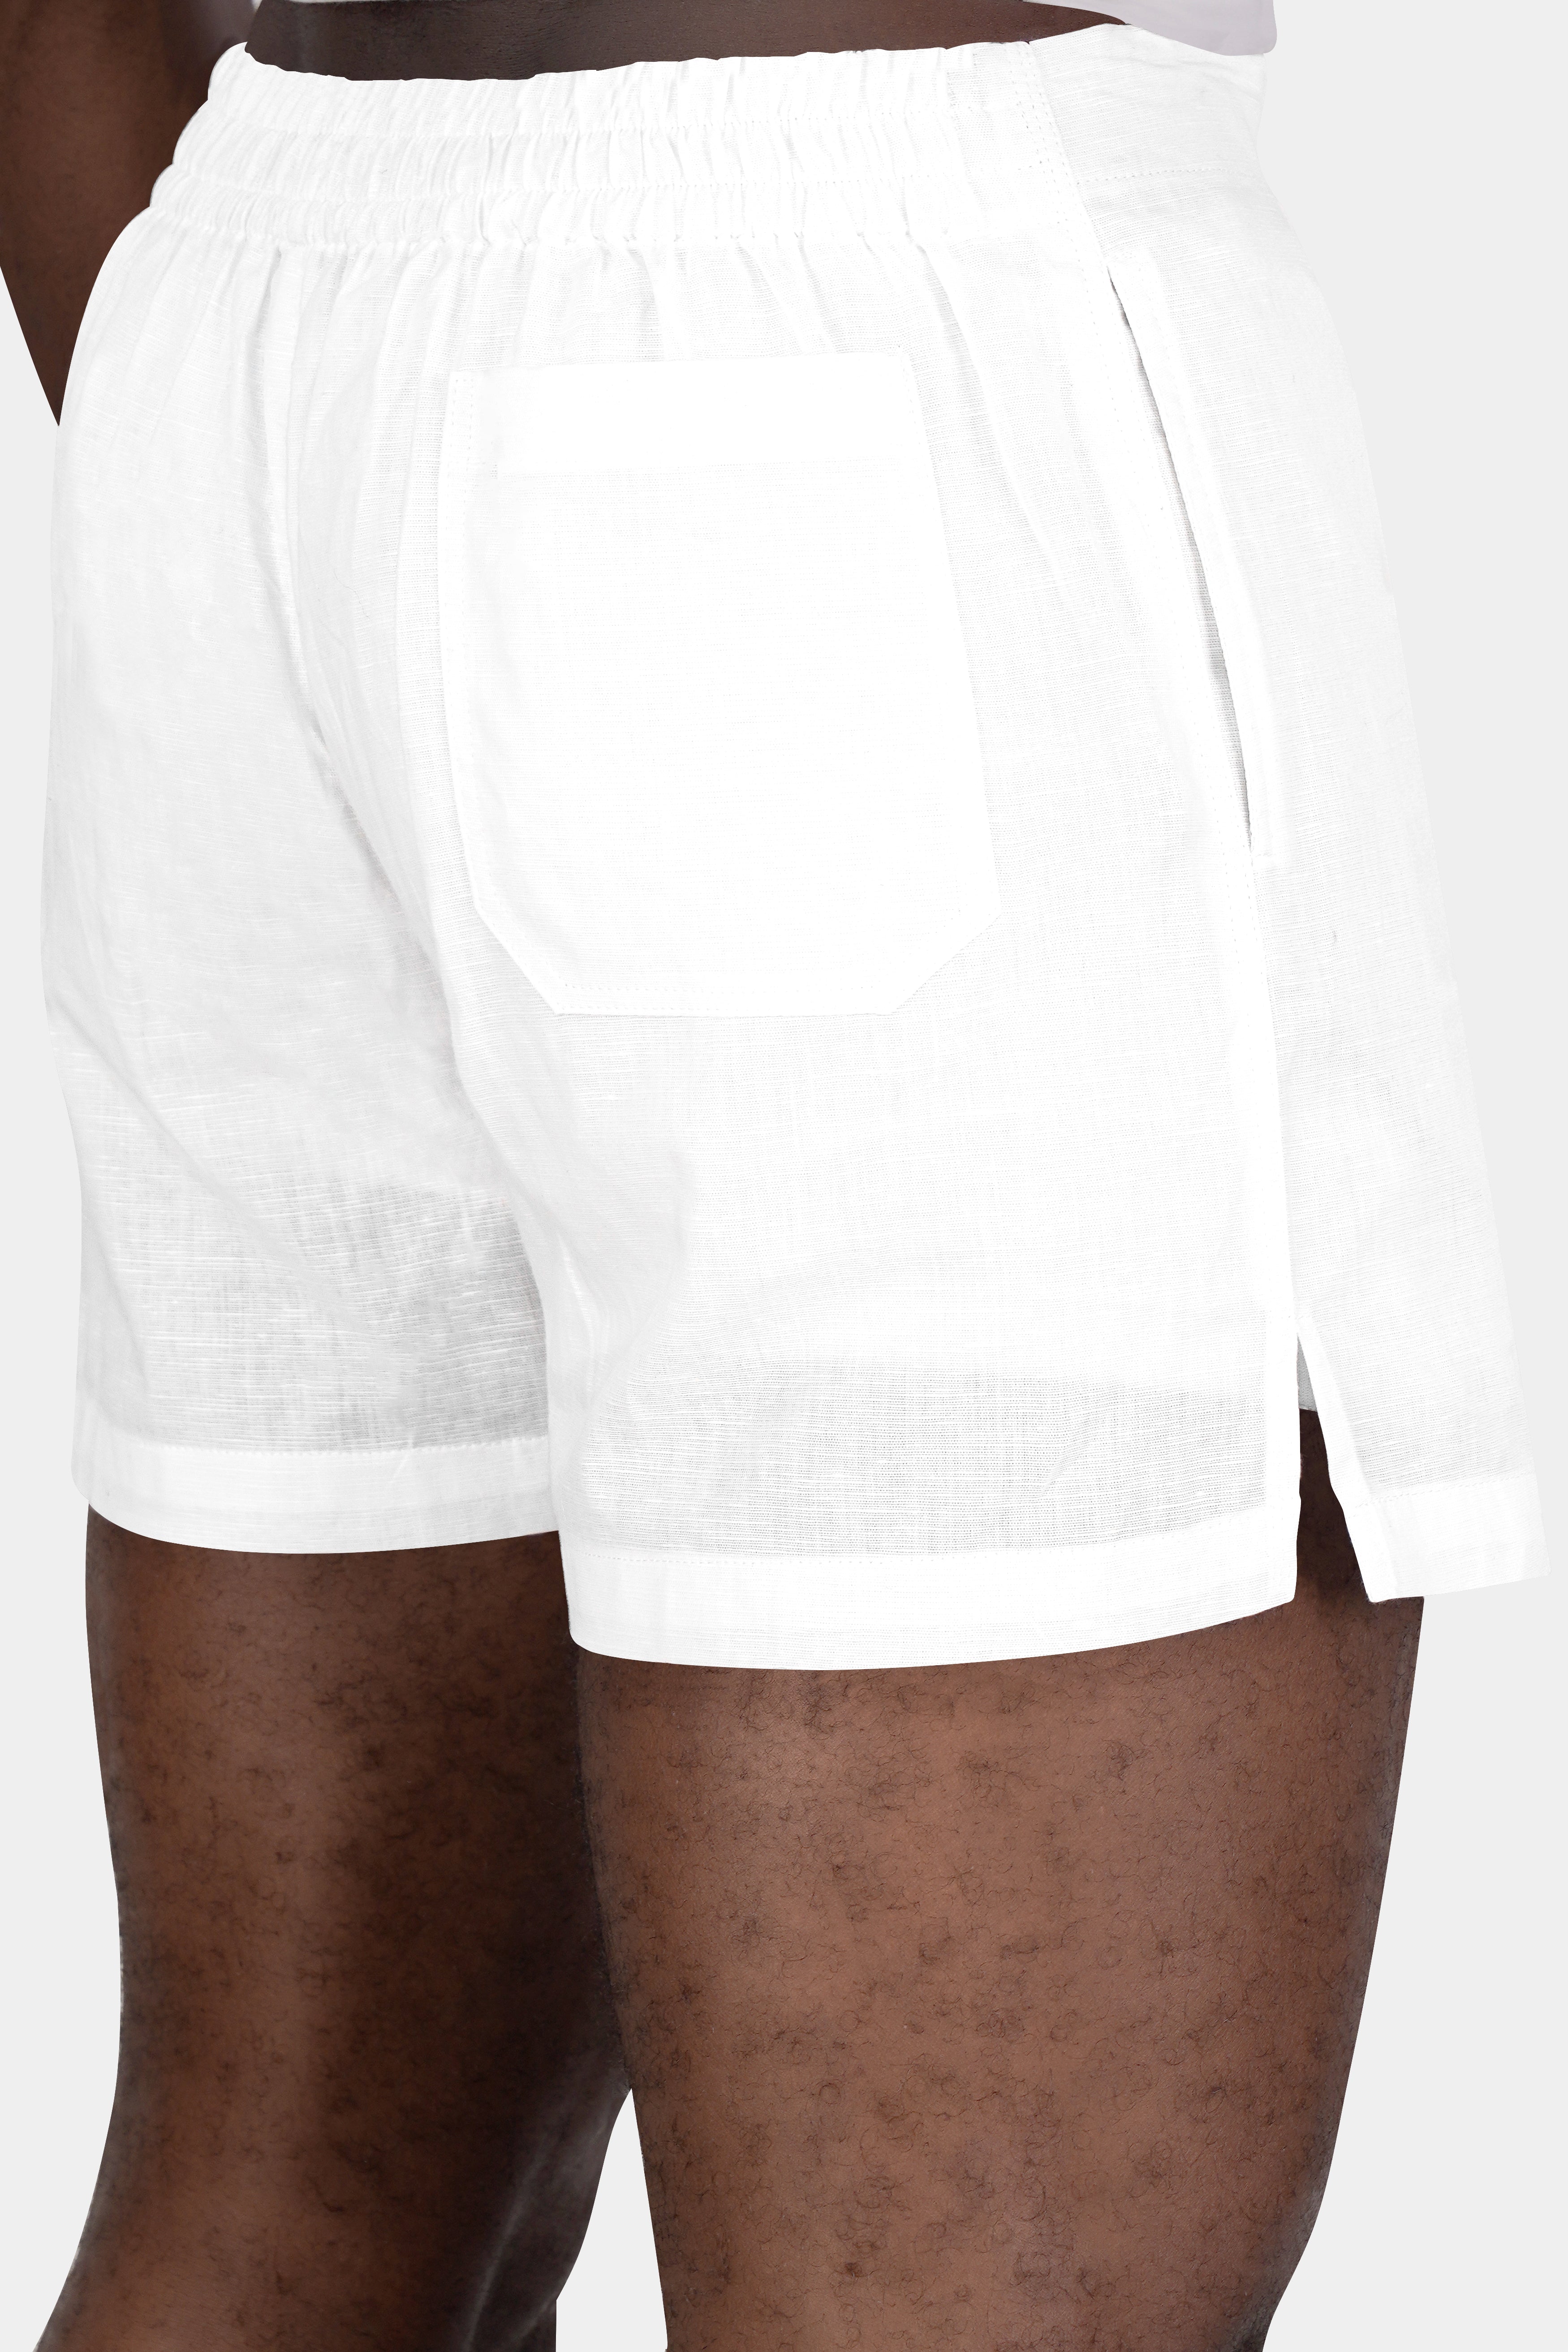 Bright White Plain-Solid Premium Linen Boxers For Man